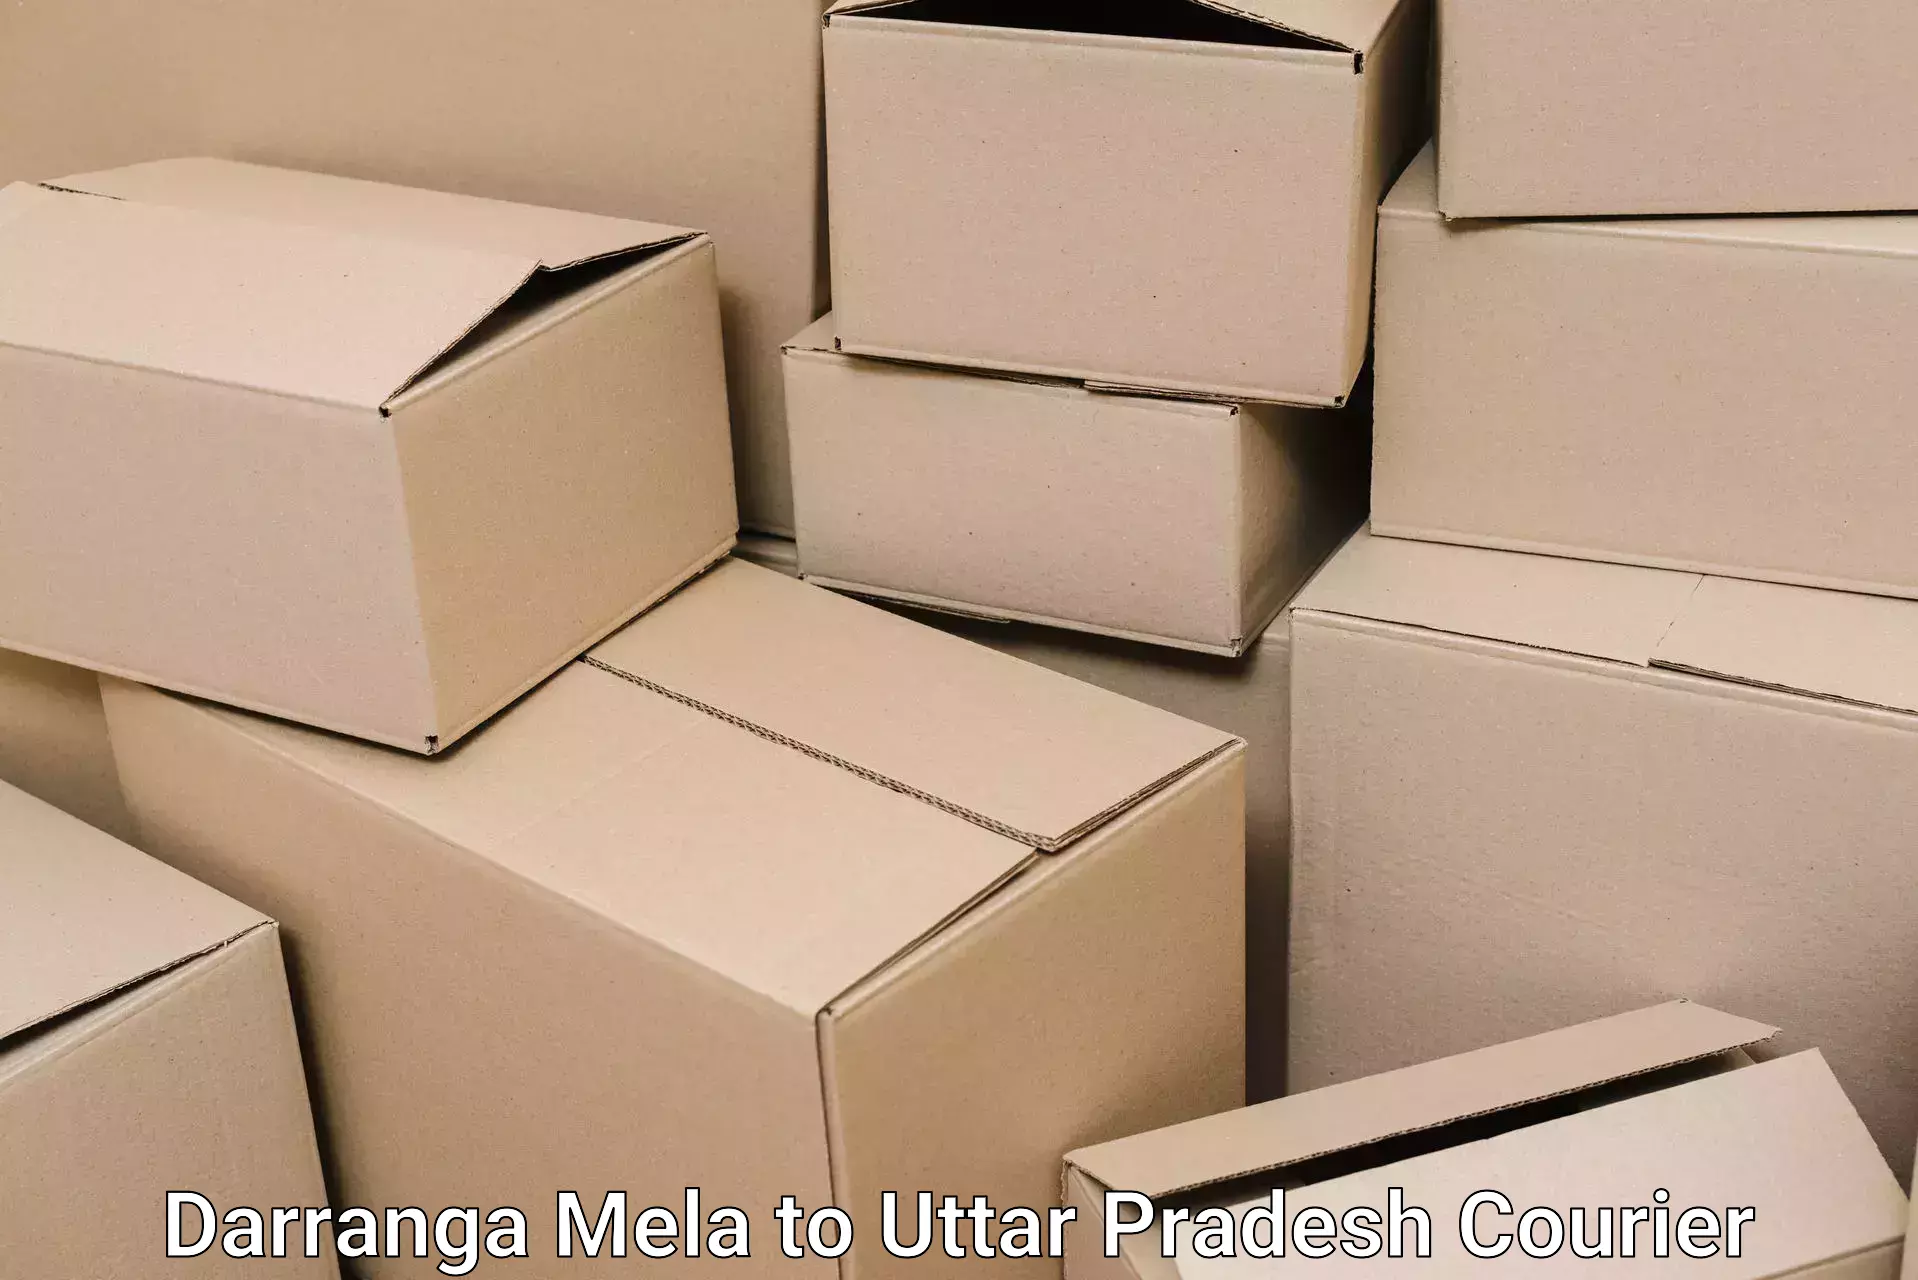 Furniture delivery service Darranga Mela to Dataganj